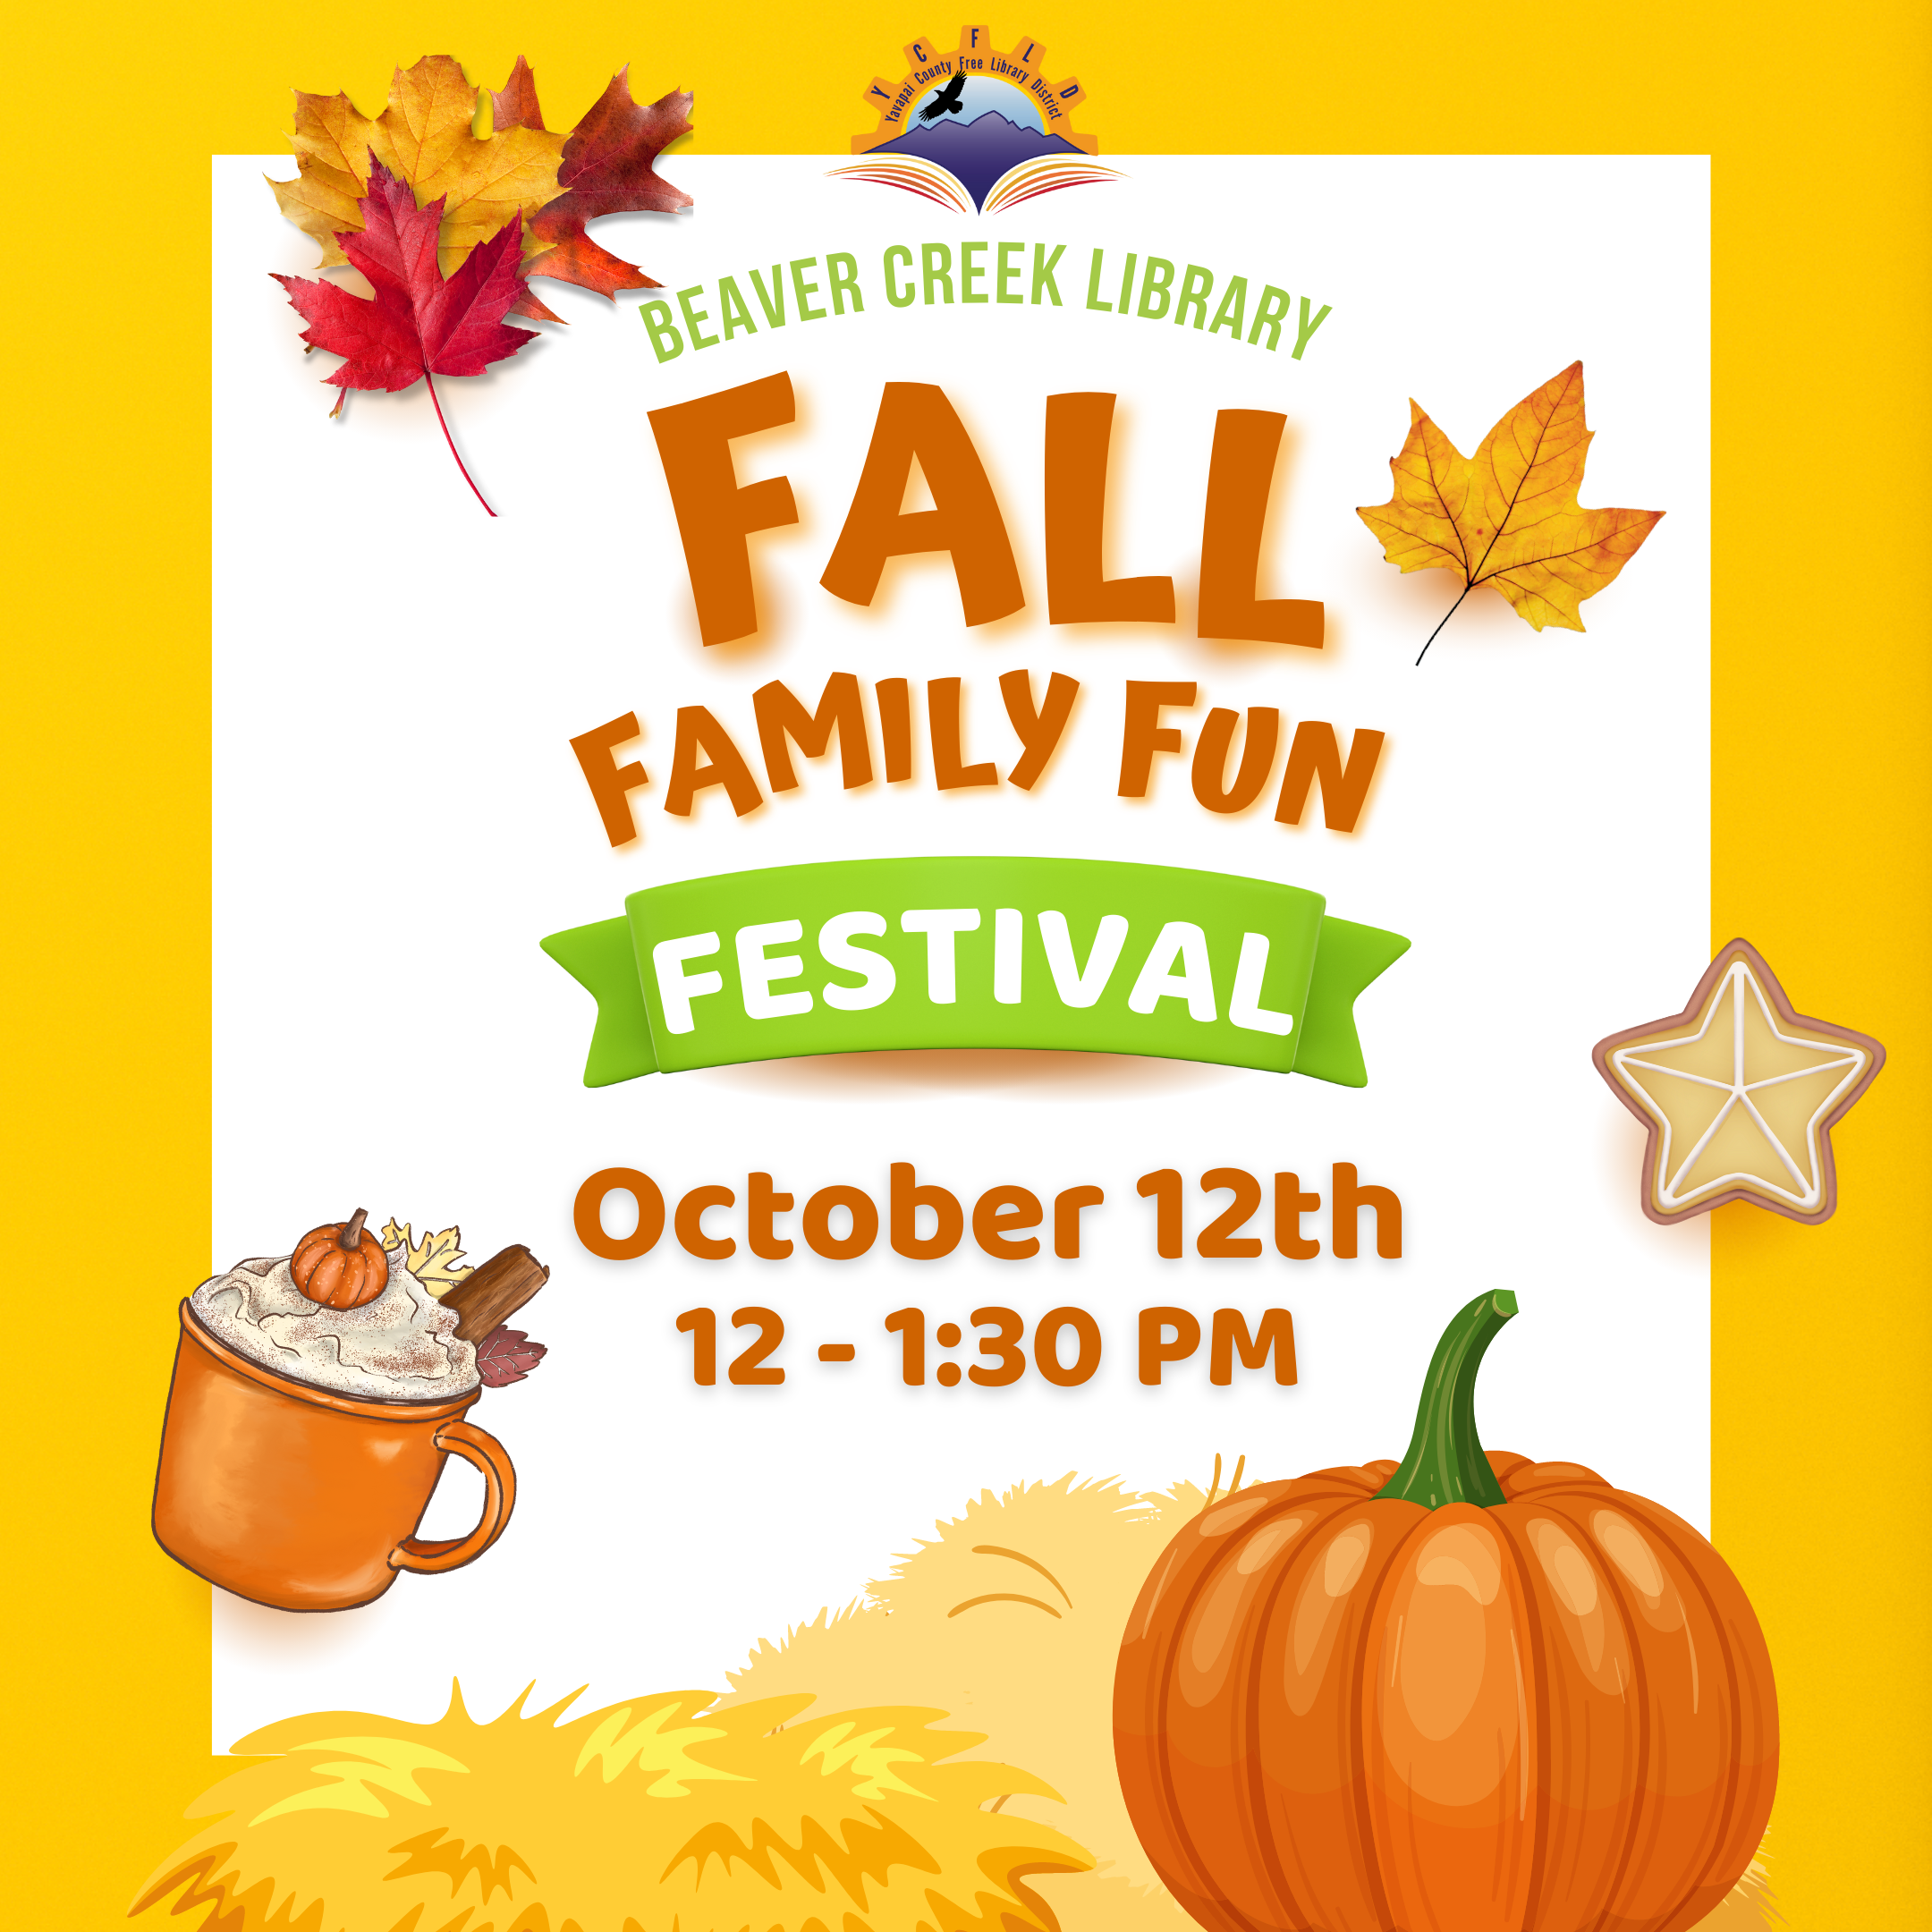 Fall Family Fun Festival at the Beaver Creek Library!  